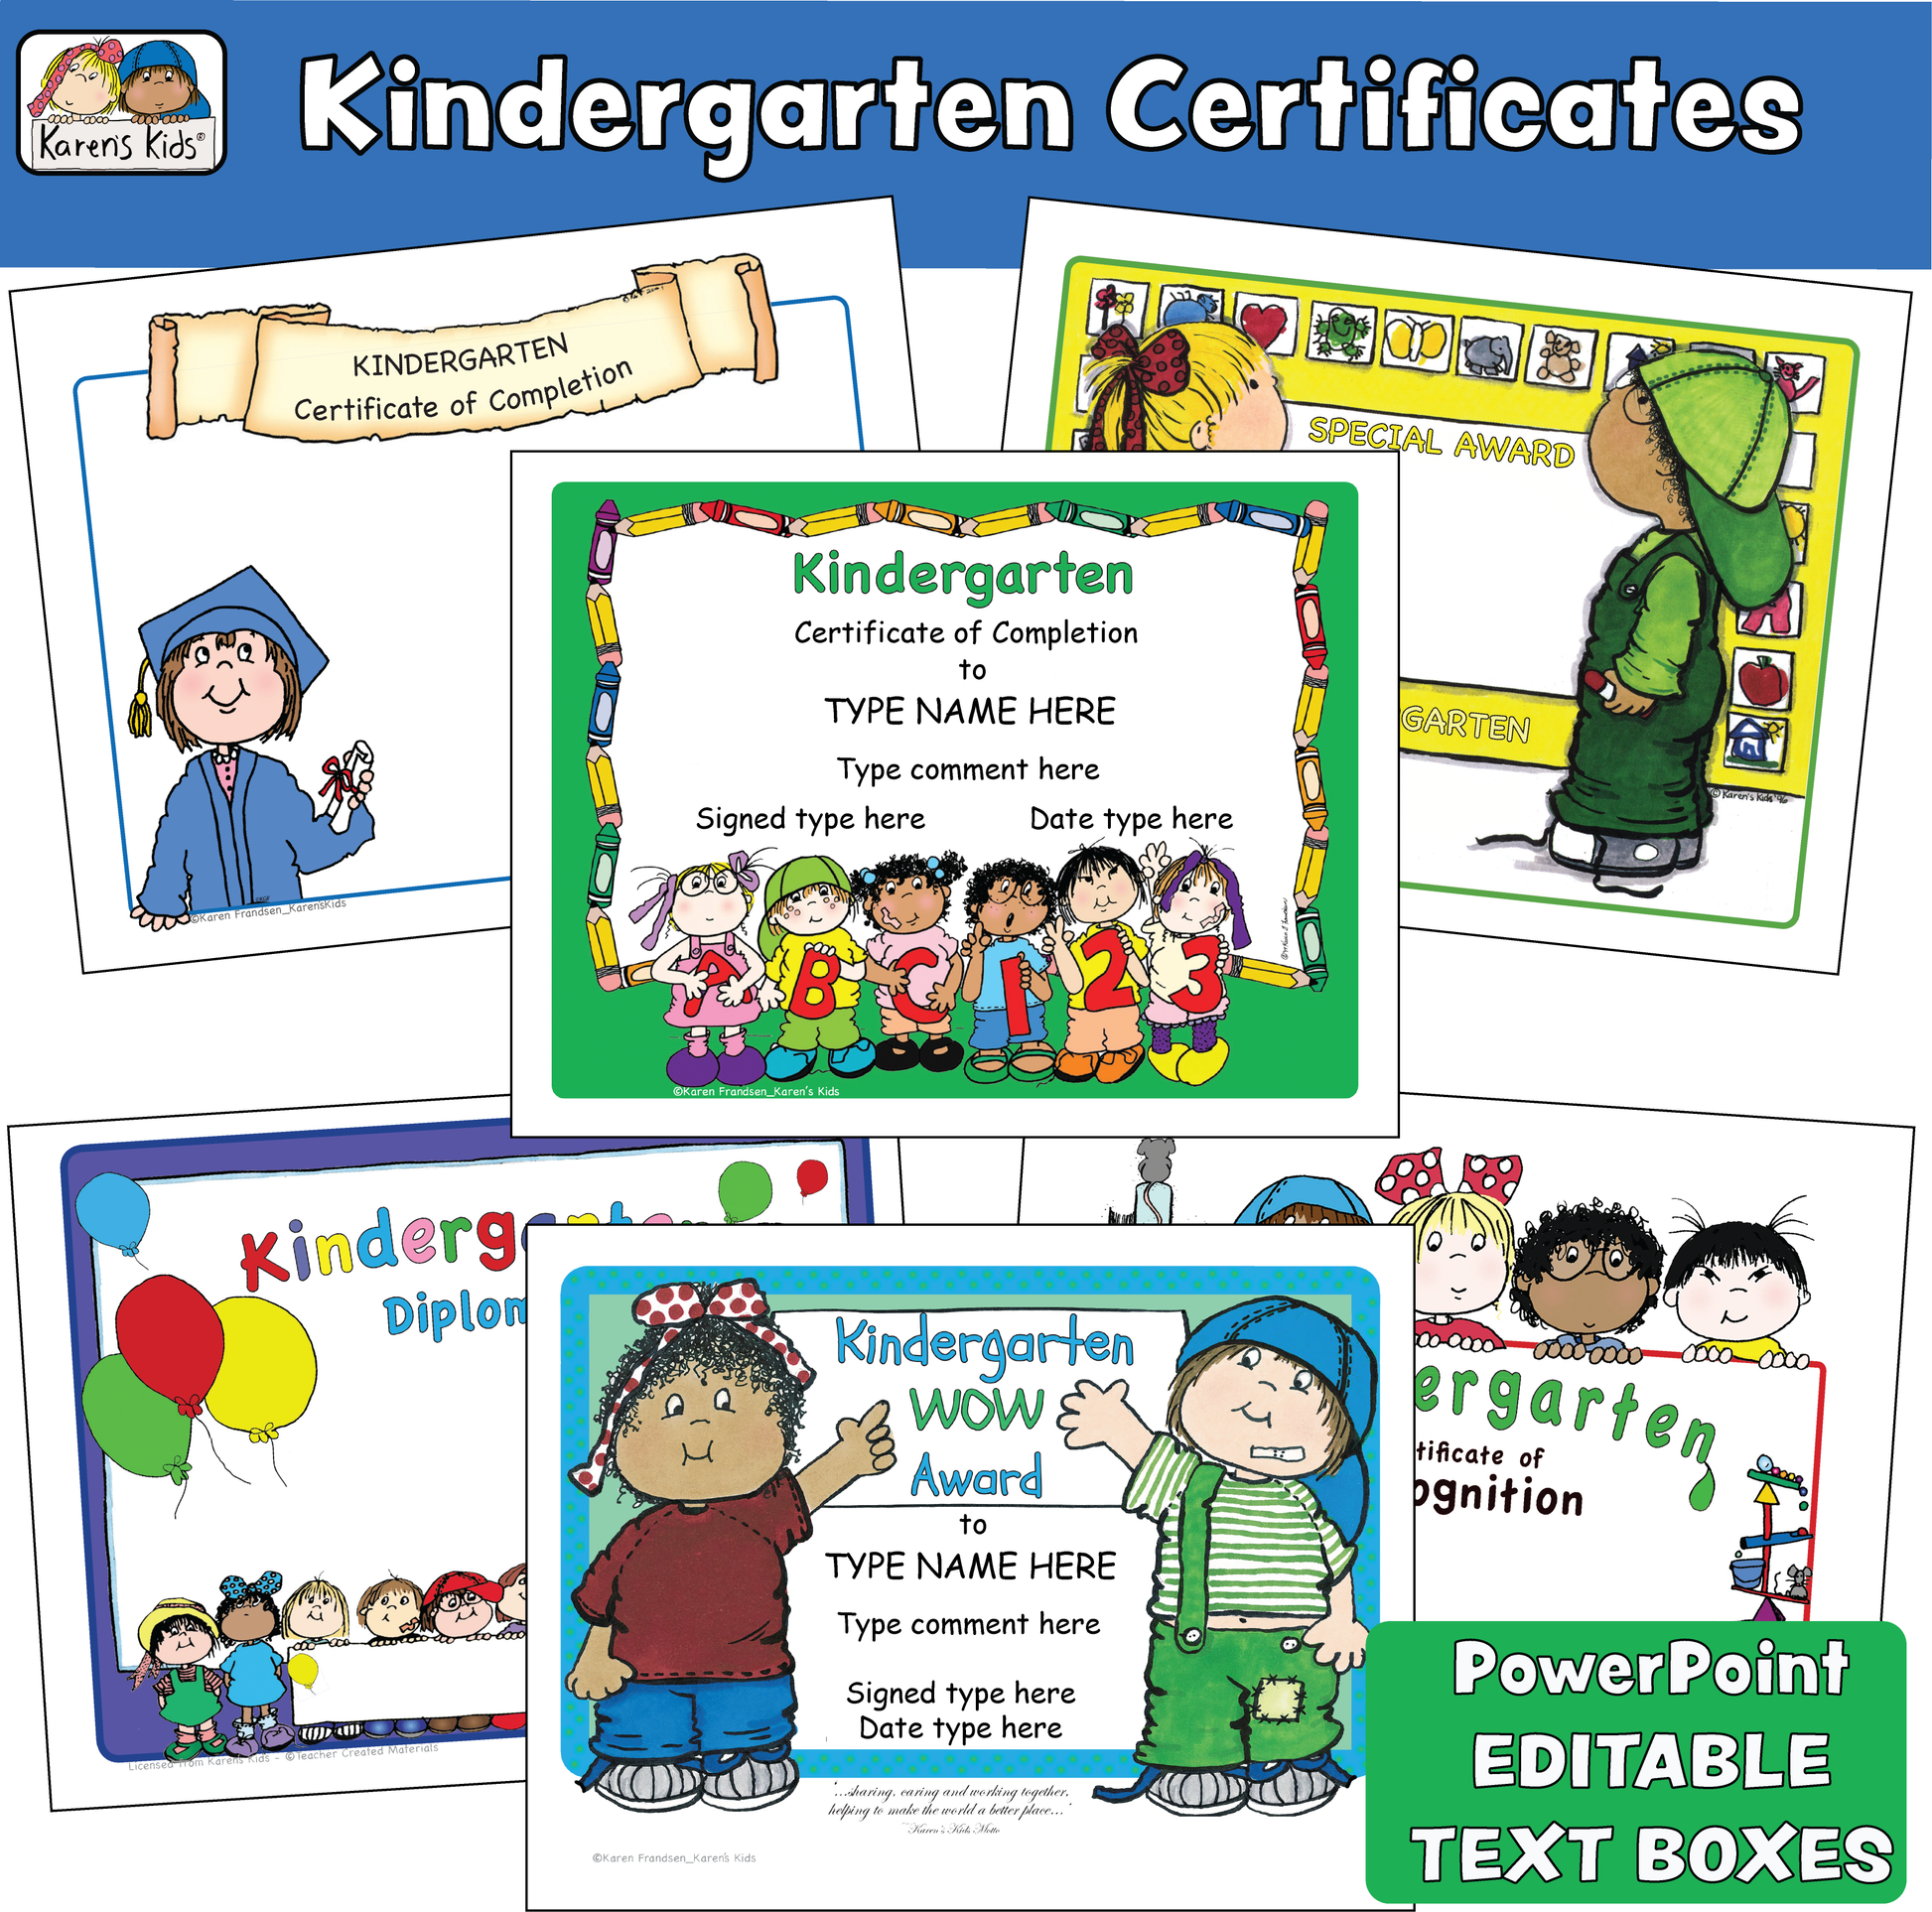 Samples of full color PowerPoint editable Kindergarten Certificates.